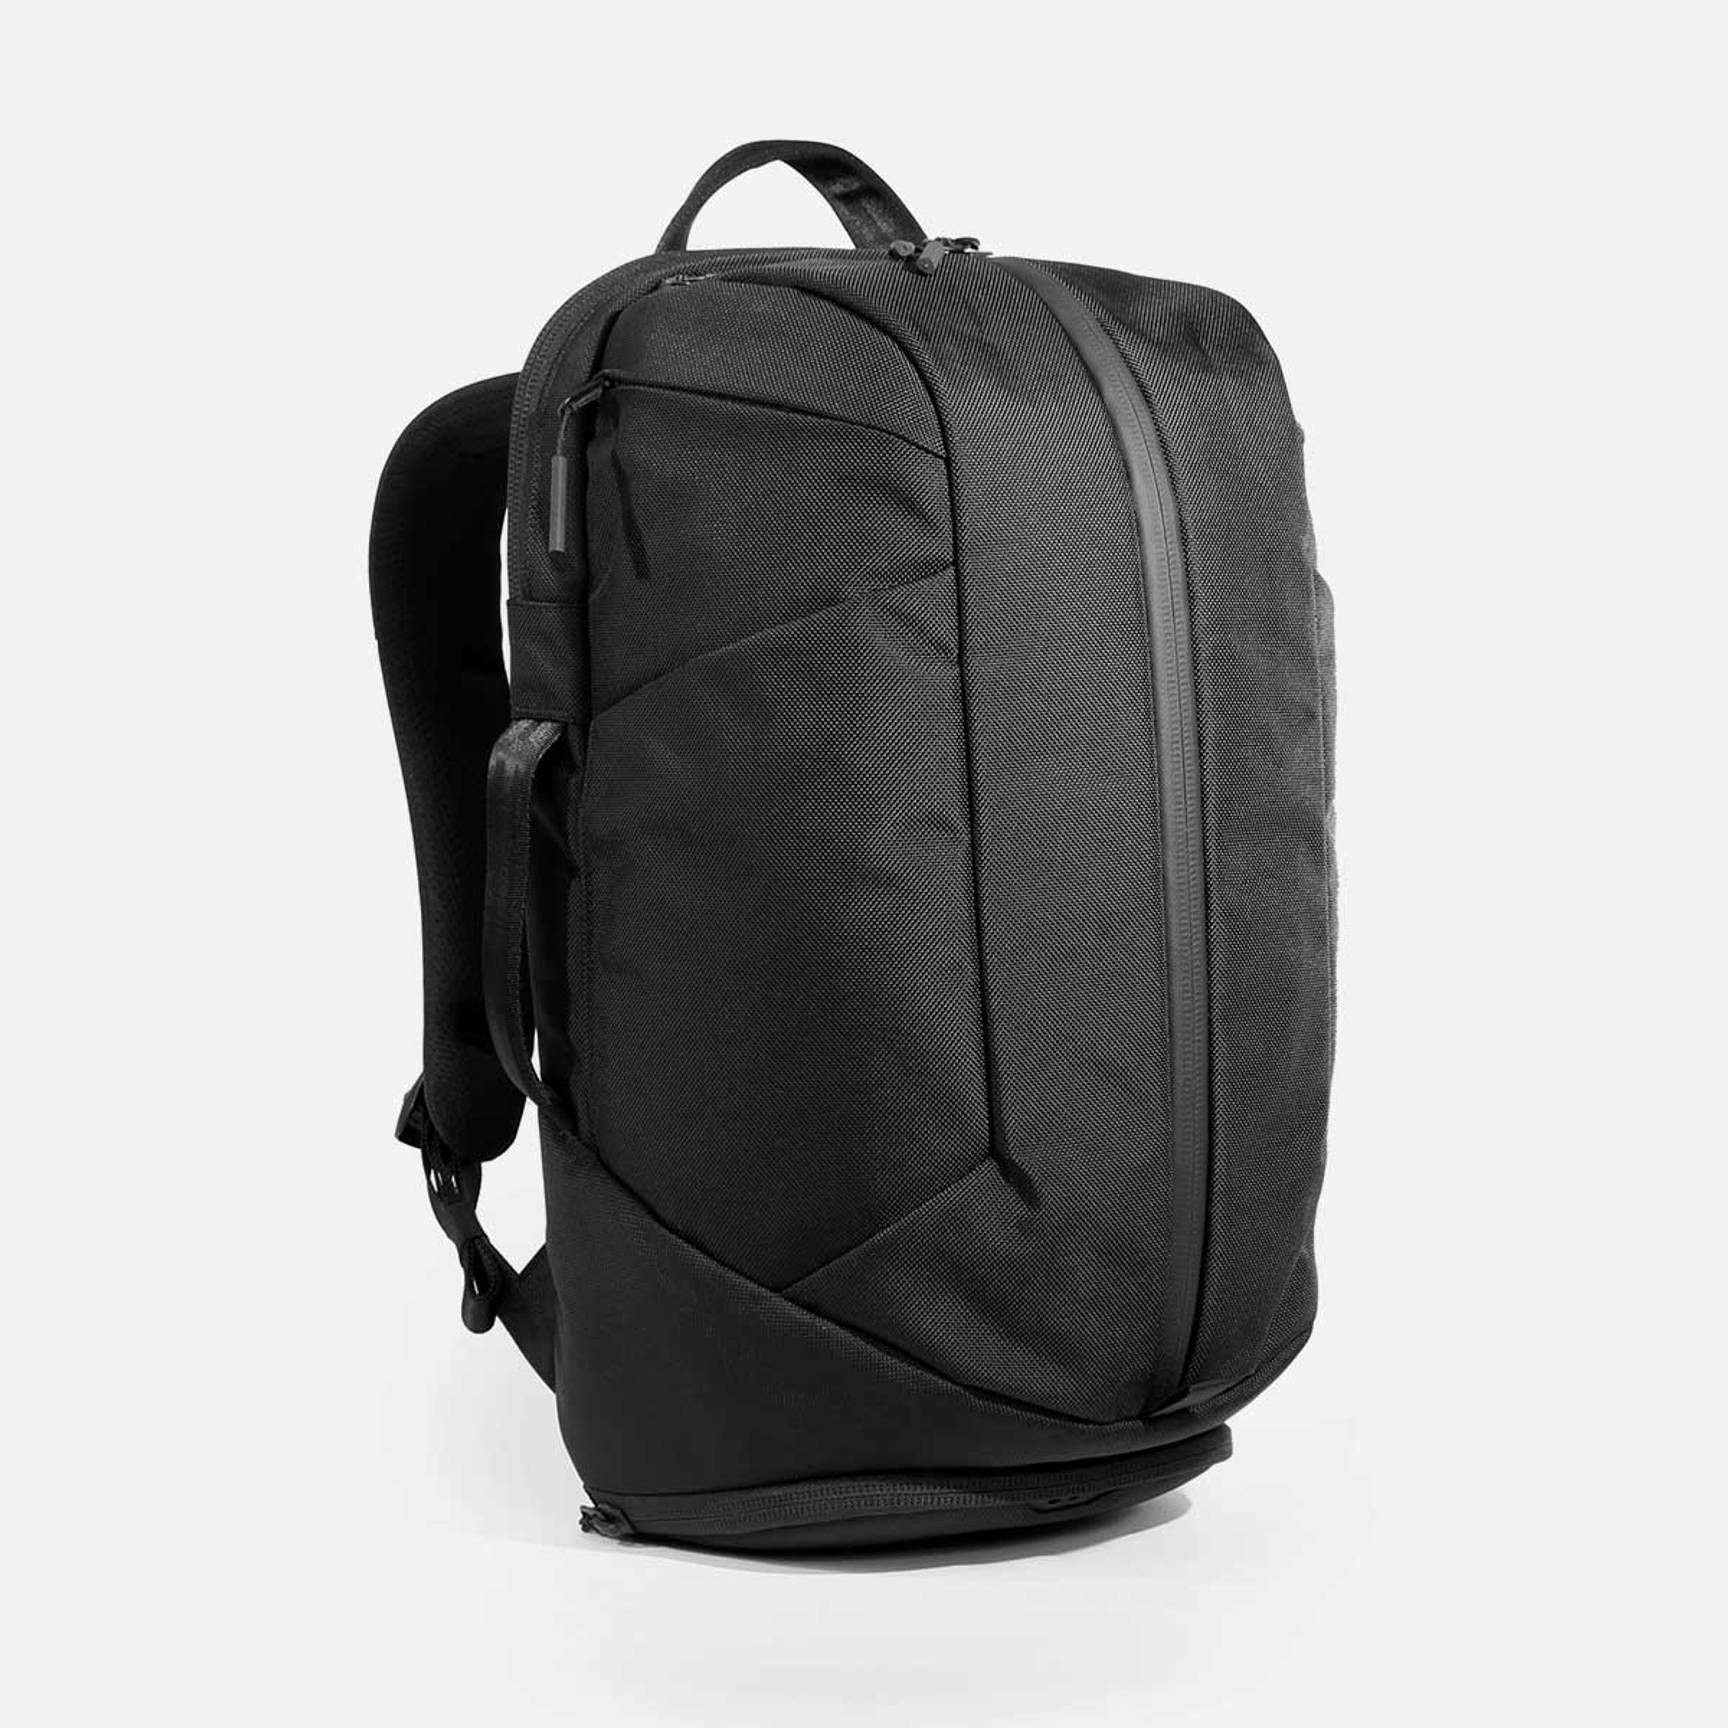 Shop Bags - Gym Bags, Backpacks, Laptop Bags